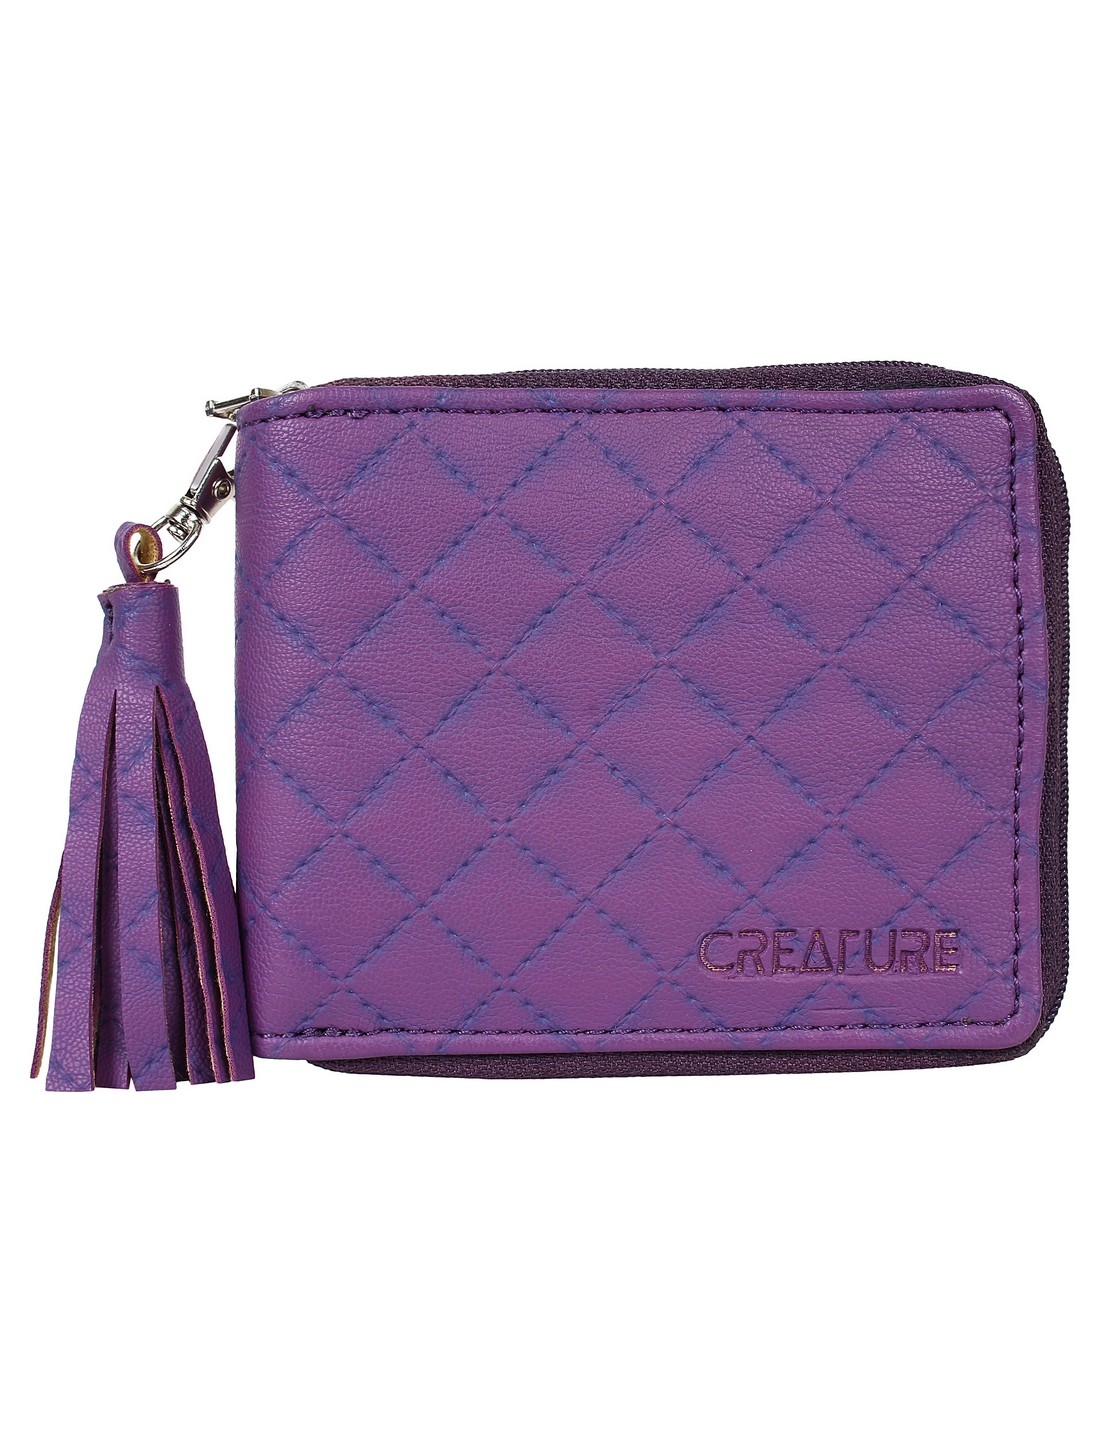 CREATURE | Creature Purple PU Leather Zipper Wallet for Women